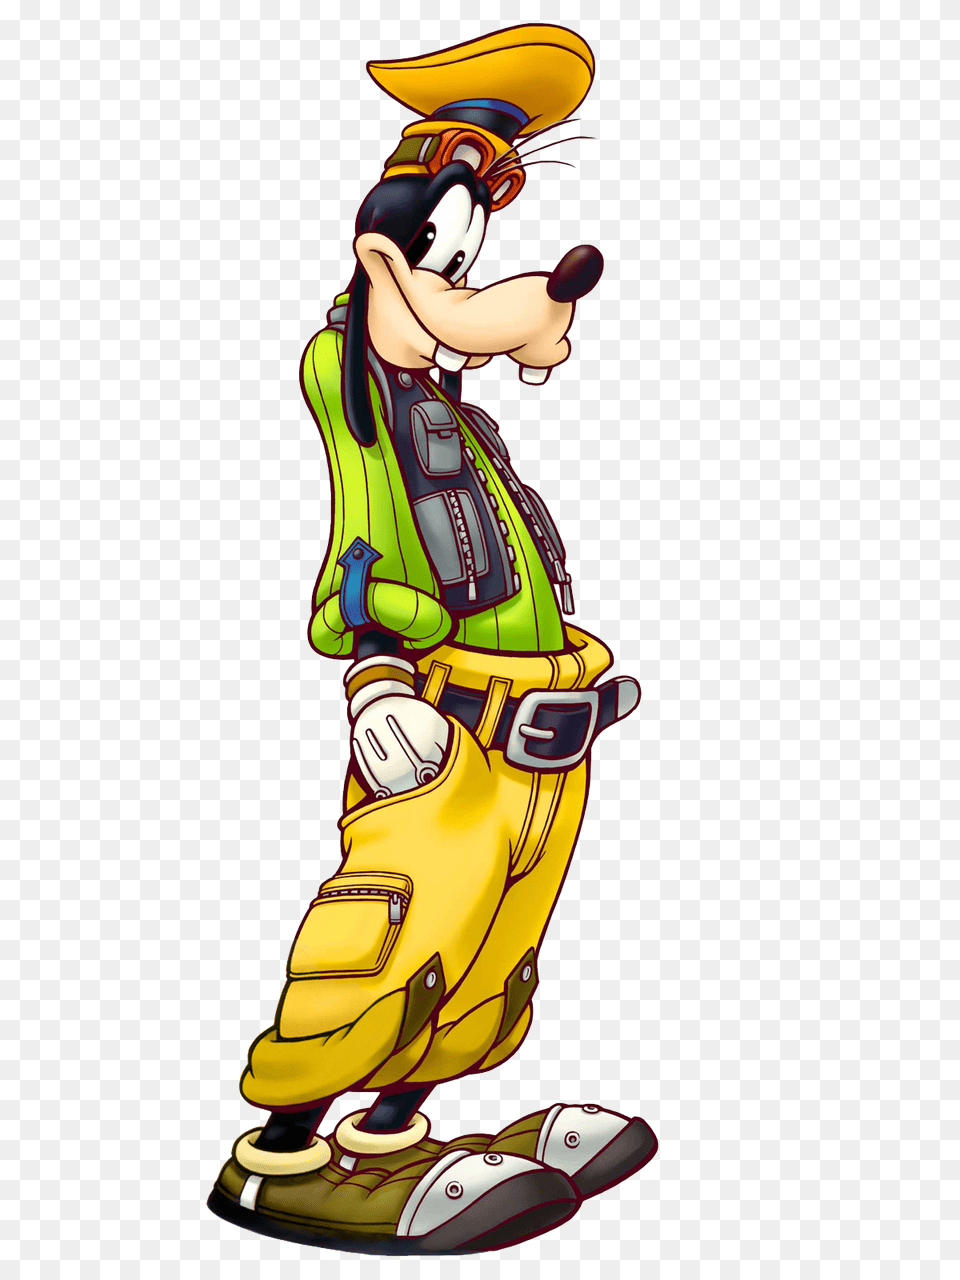 Download Hd Kingdom Hearts Image Goofy Kingdom Hearts Art, Cartoon, Person Free Png